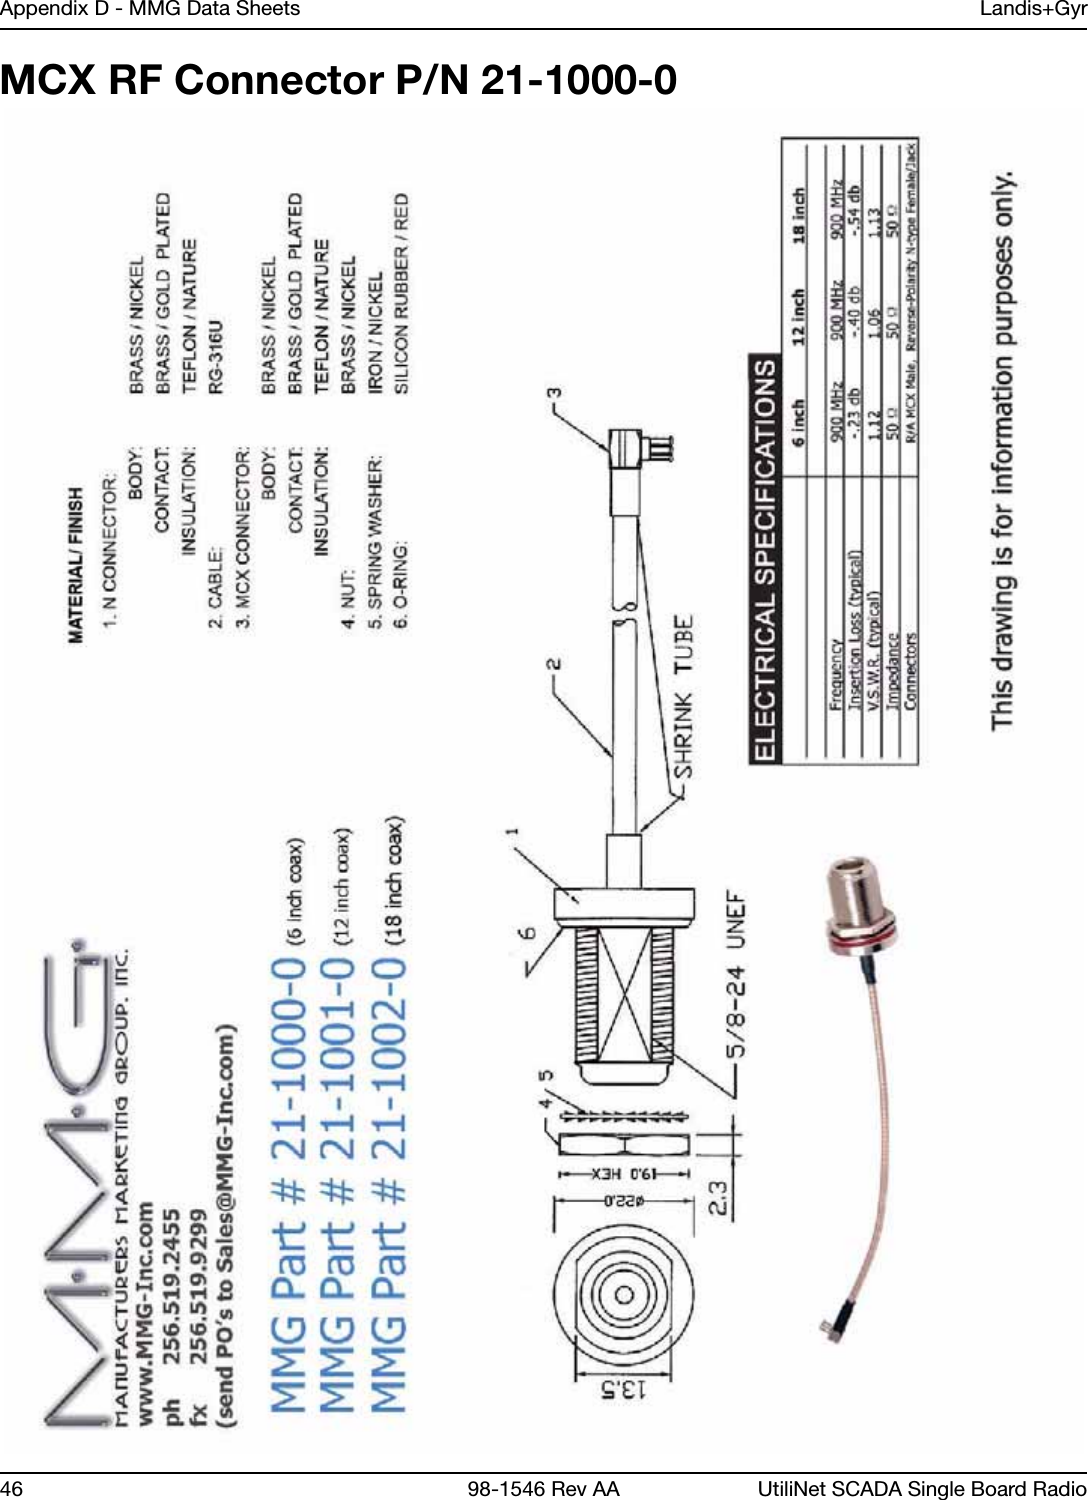 Appendix D - MMG Data Sheets Landis+Gyr46 98-1546 Rev AA UtiliNet SCADA Single Board RadioMCX RF Connector P/N 21-1000-0